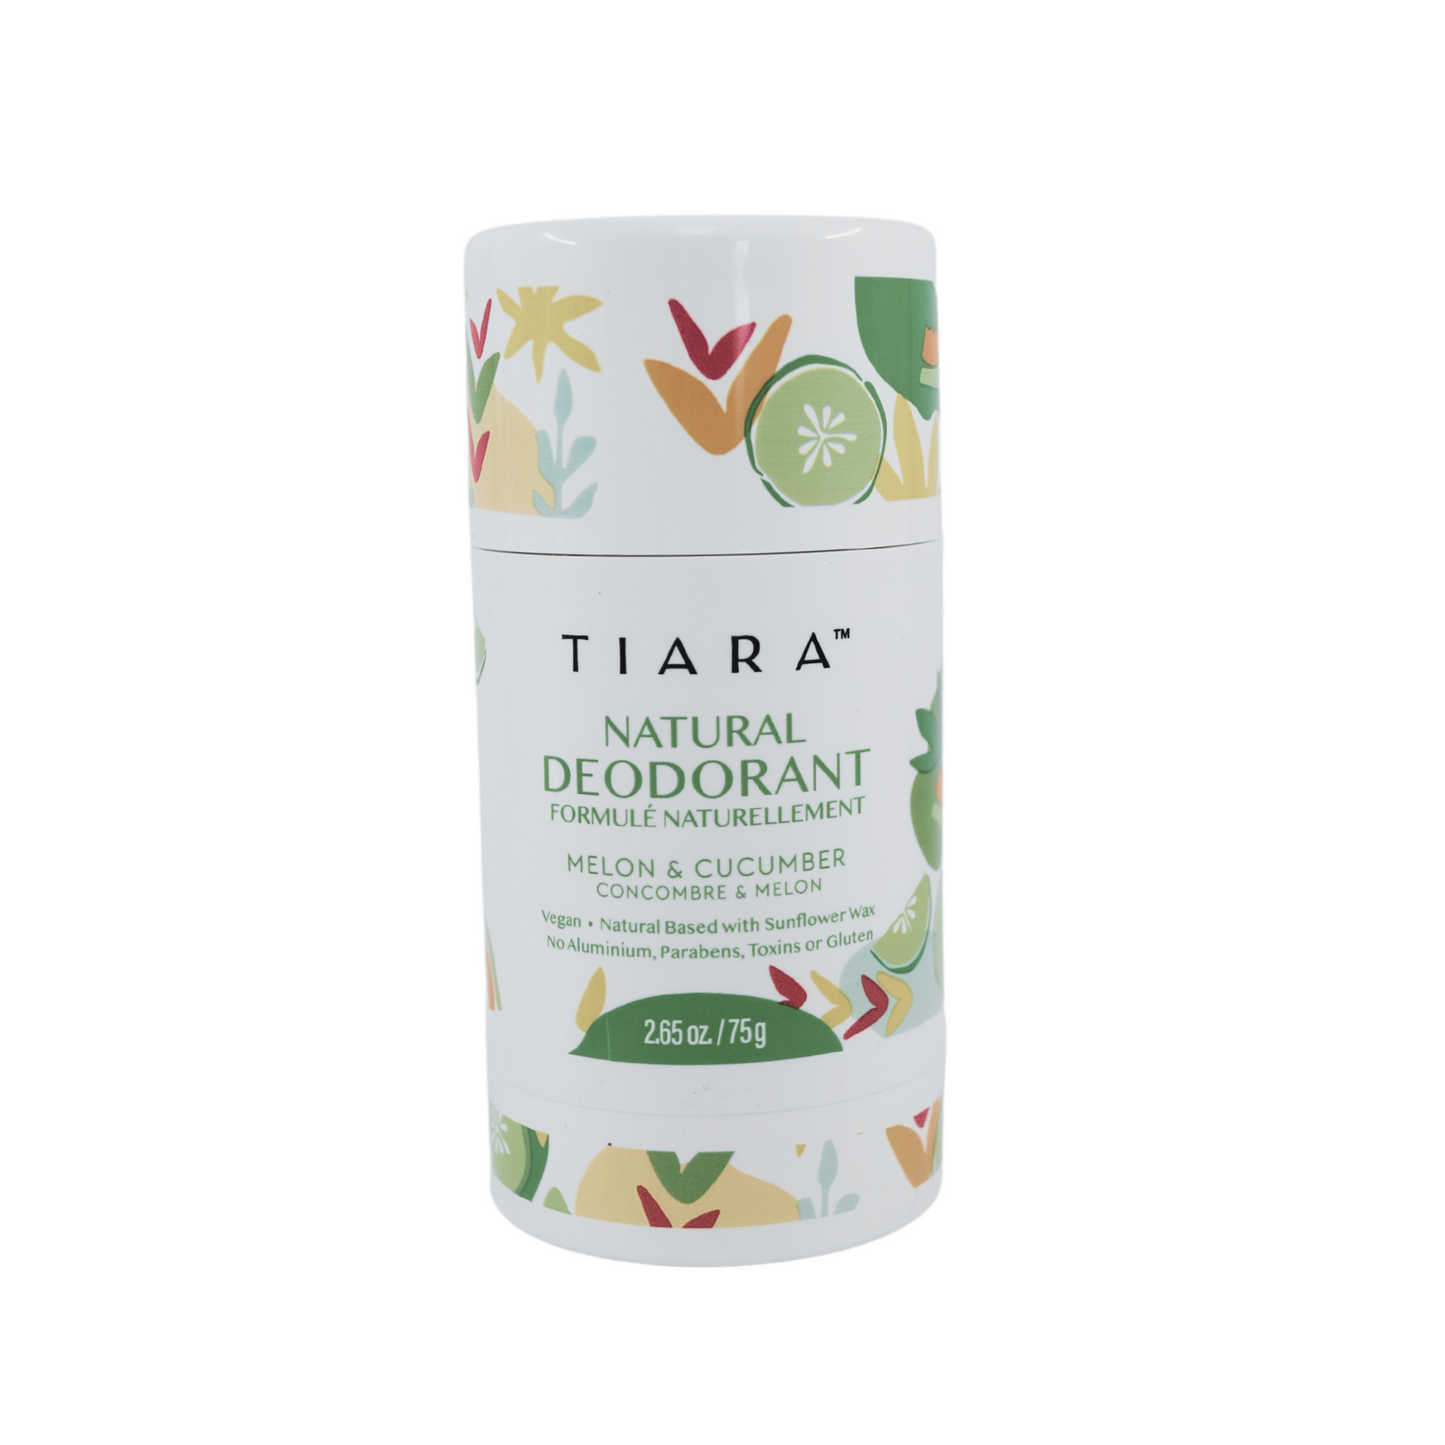 TIARA Natural Deodorant - Melon & Cucumber